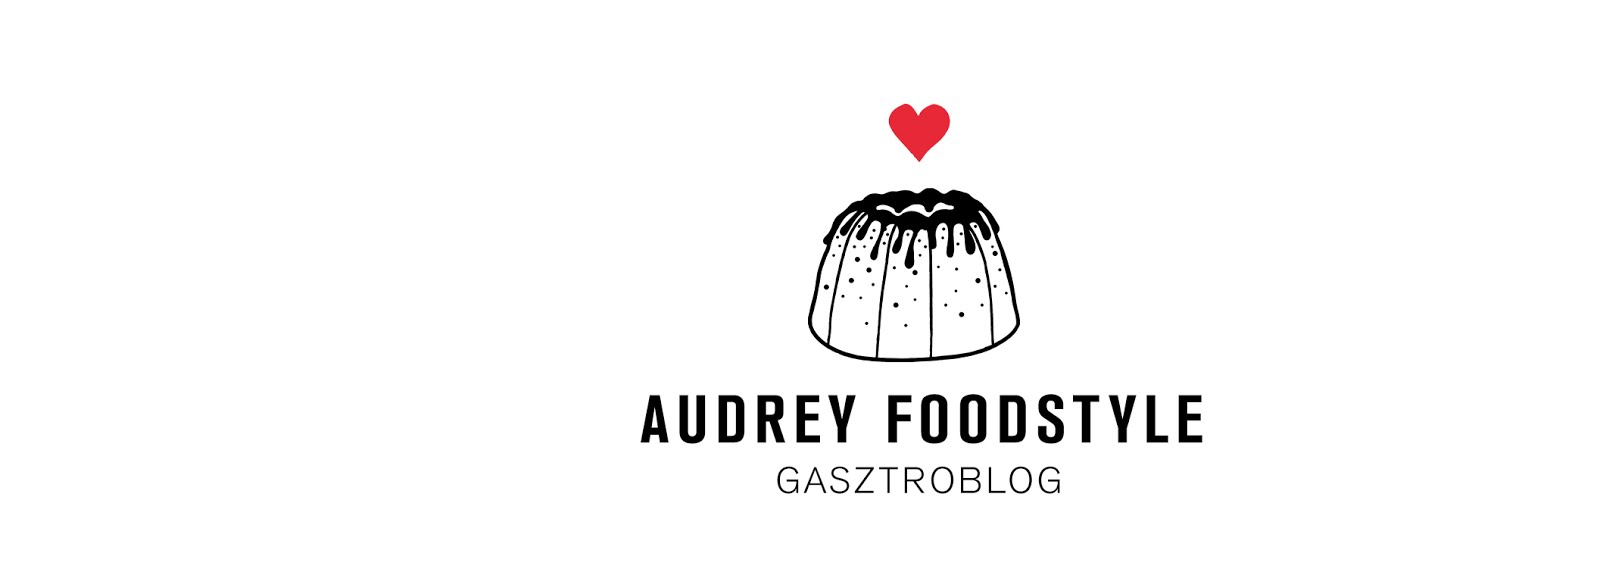 AUDREY FOODSTYLE